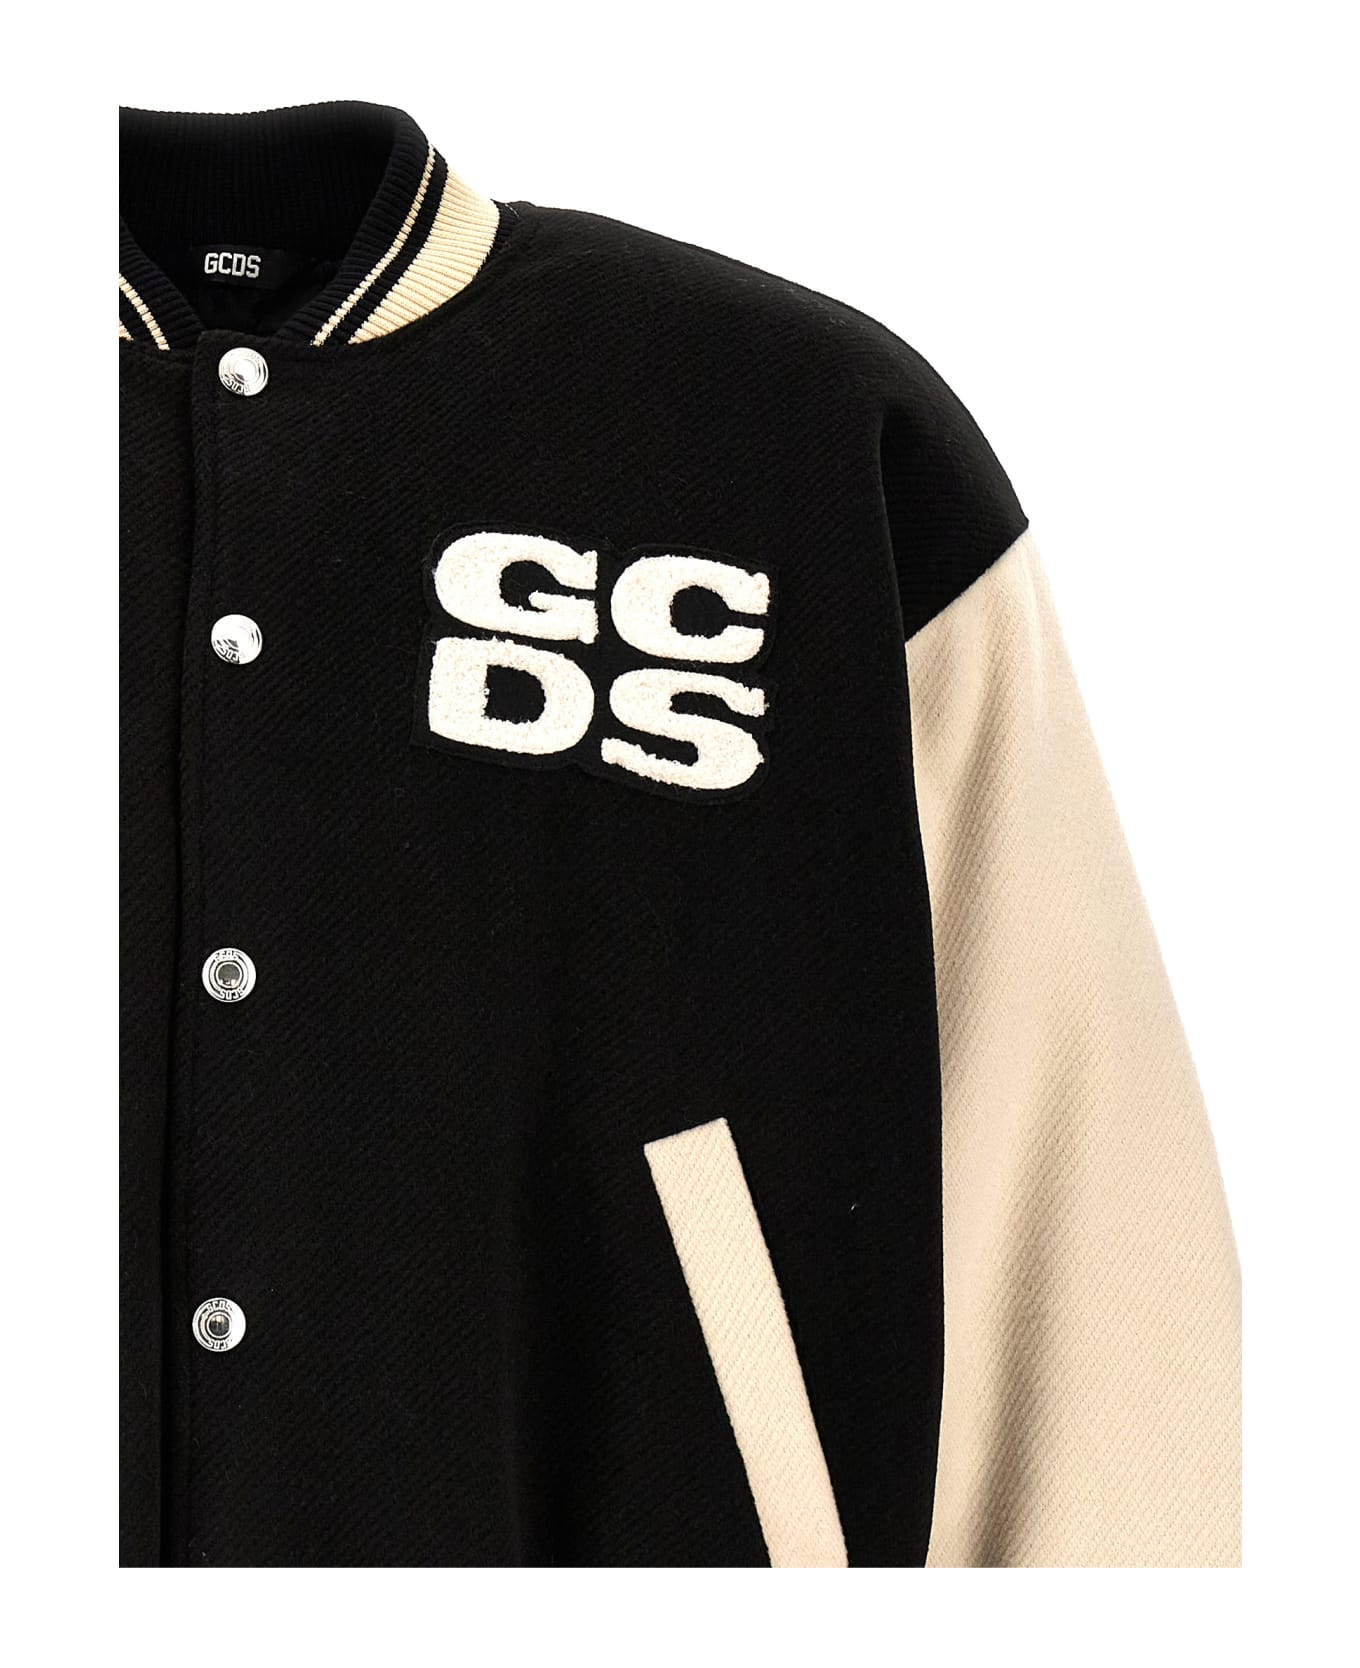 GCDS Embroidered Bomber Jacket - White/Black